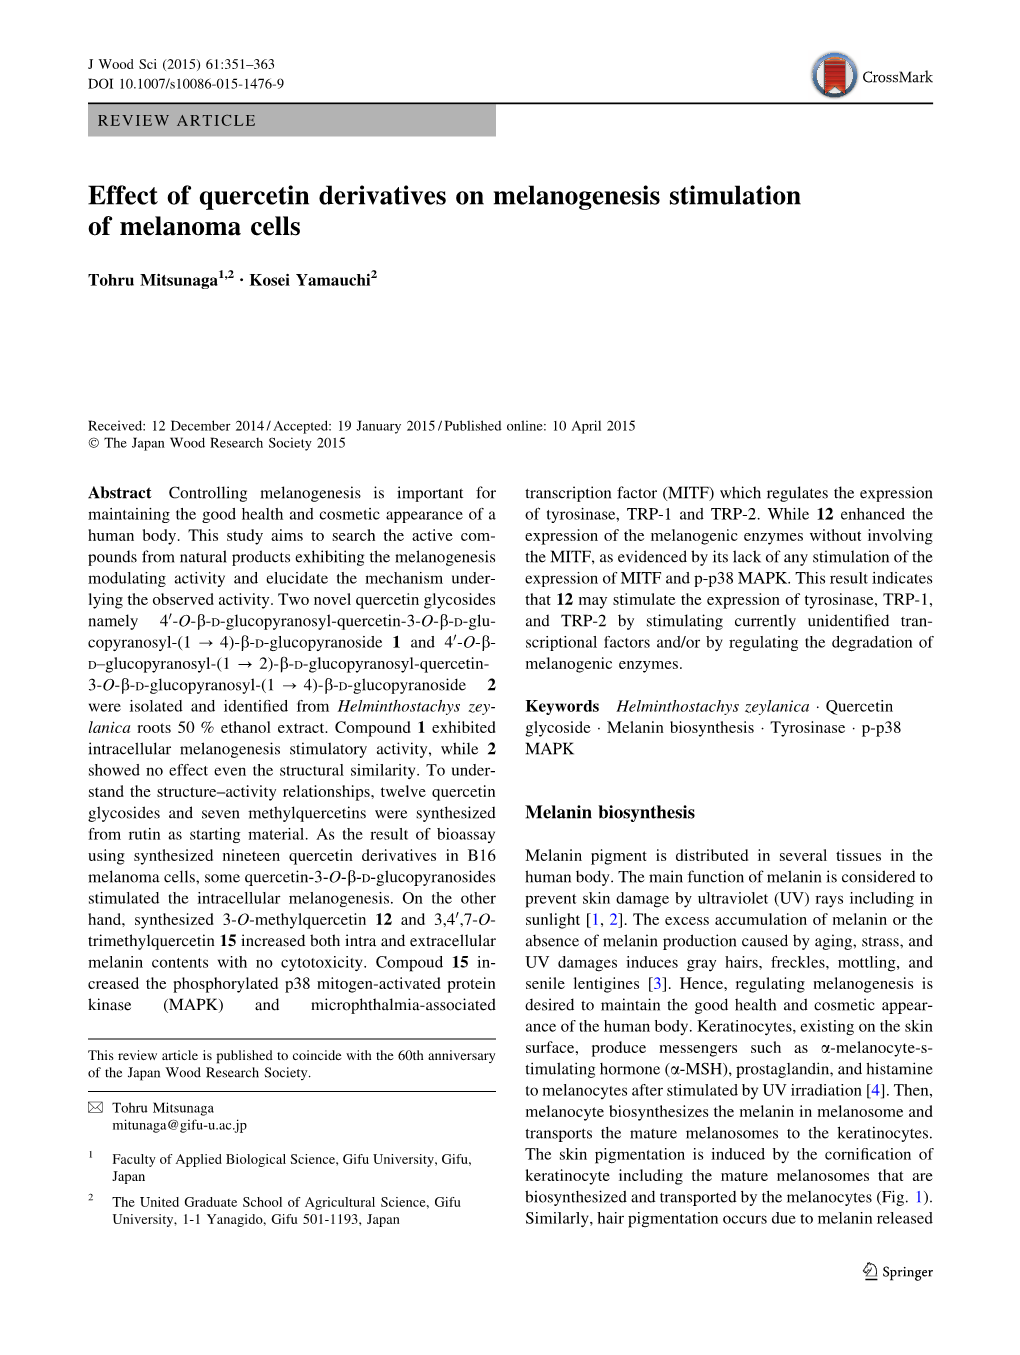 Effect of Quercetin Derivatives on Melanogenesis Stimulation of Melanoma Cells